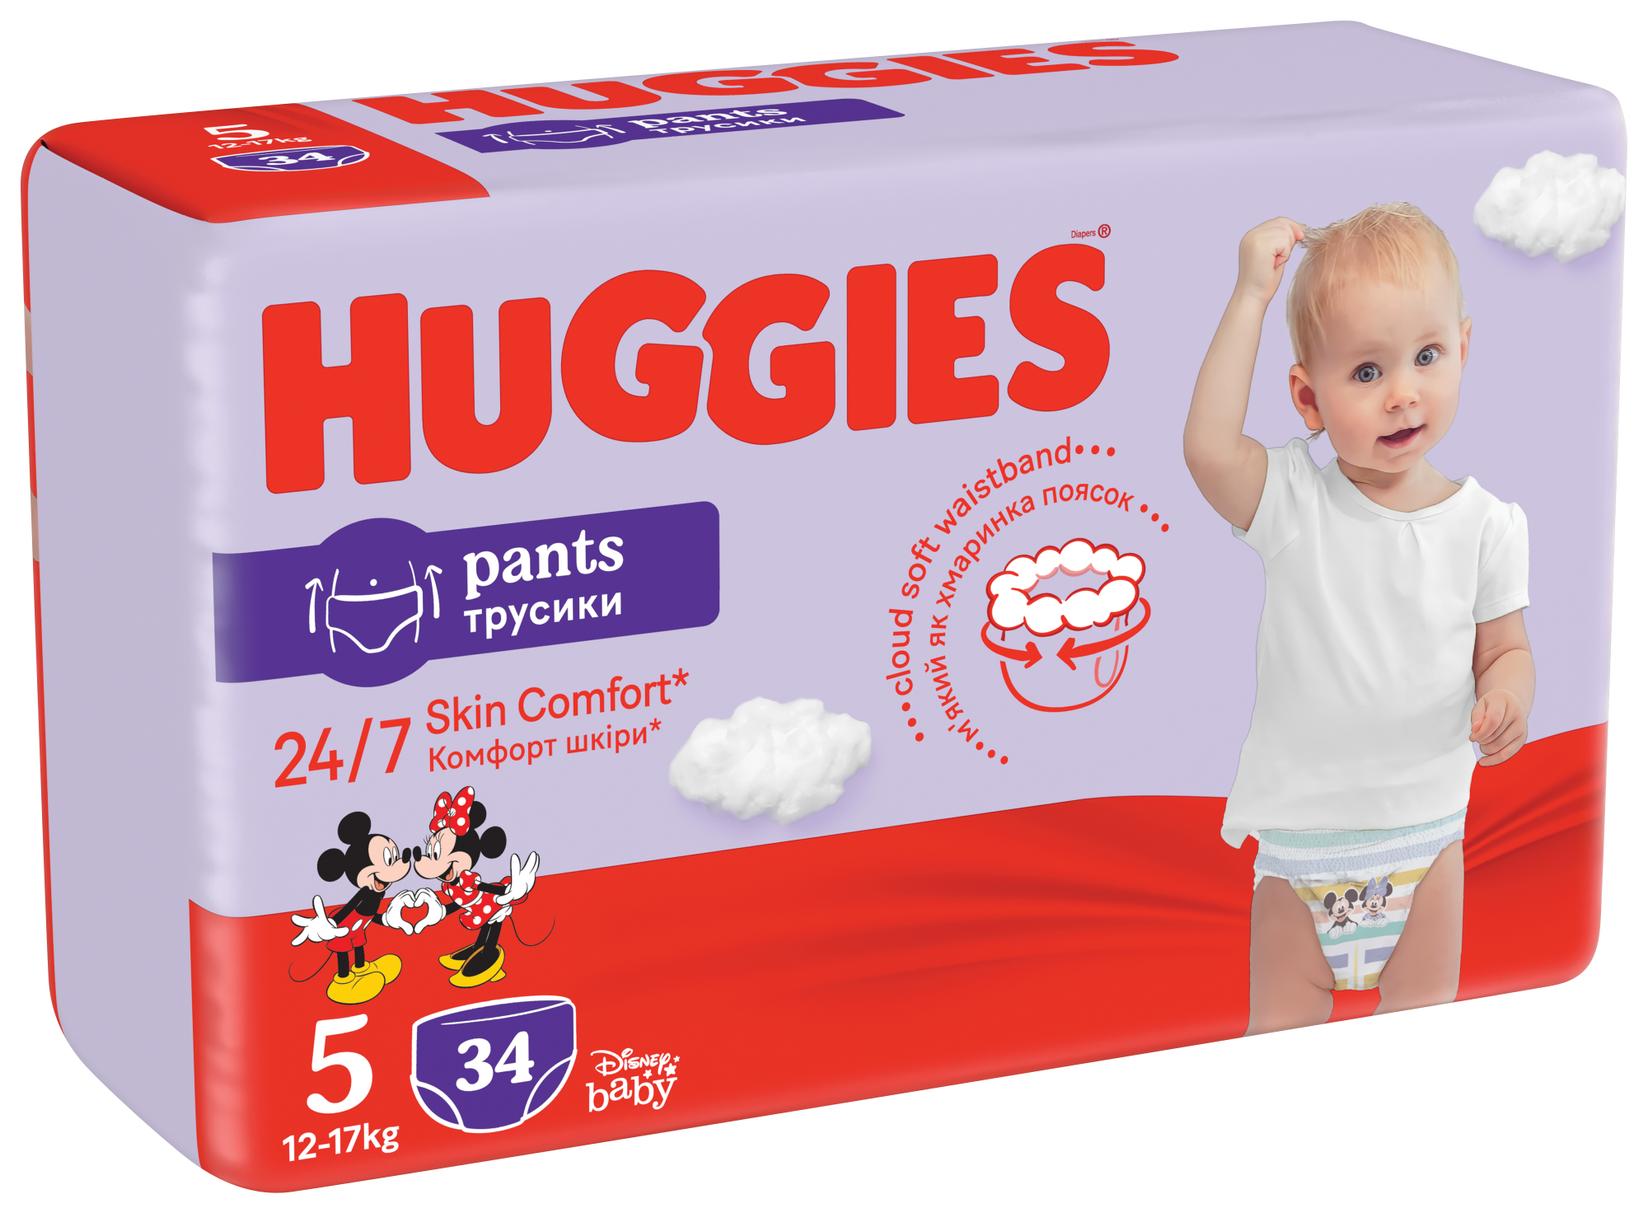 HUGGIES Pants Jumbo 5 Pelene, 12-17 kg, 34/1